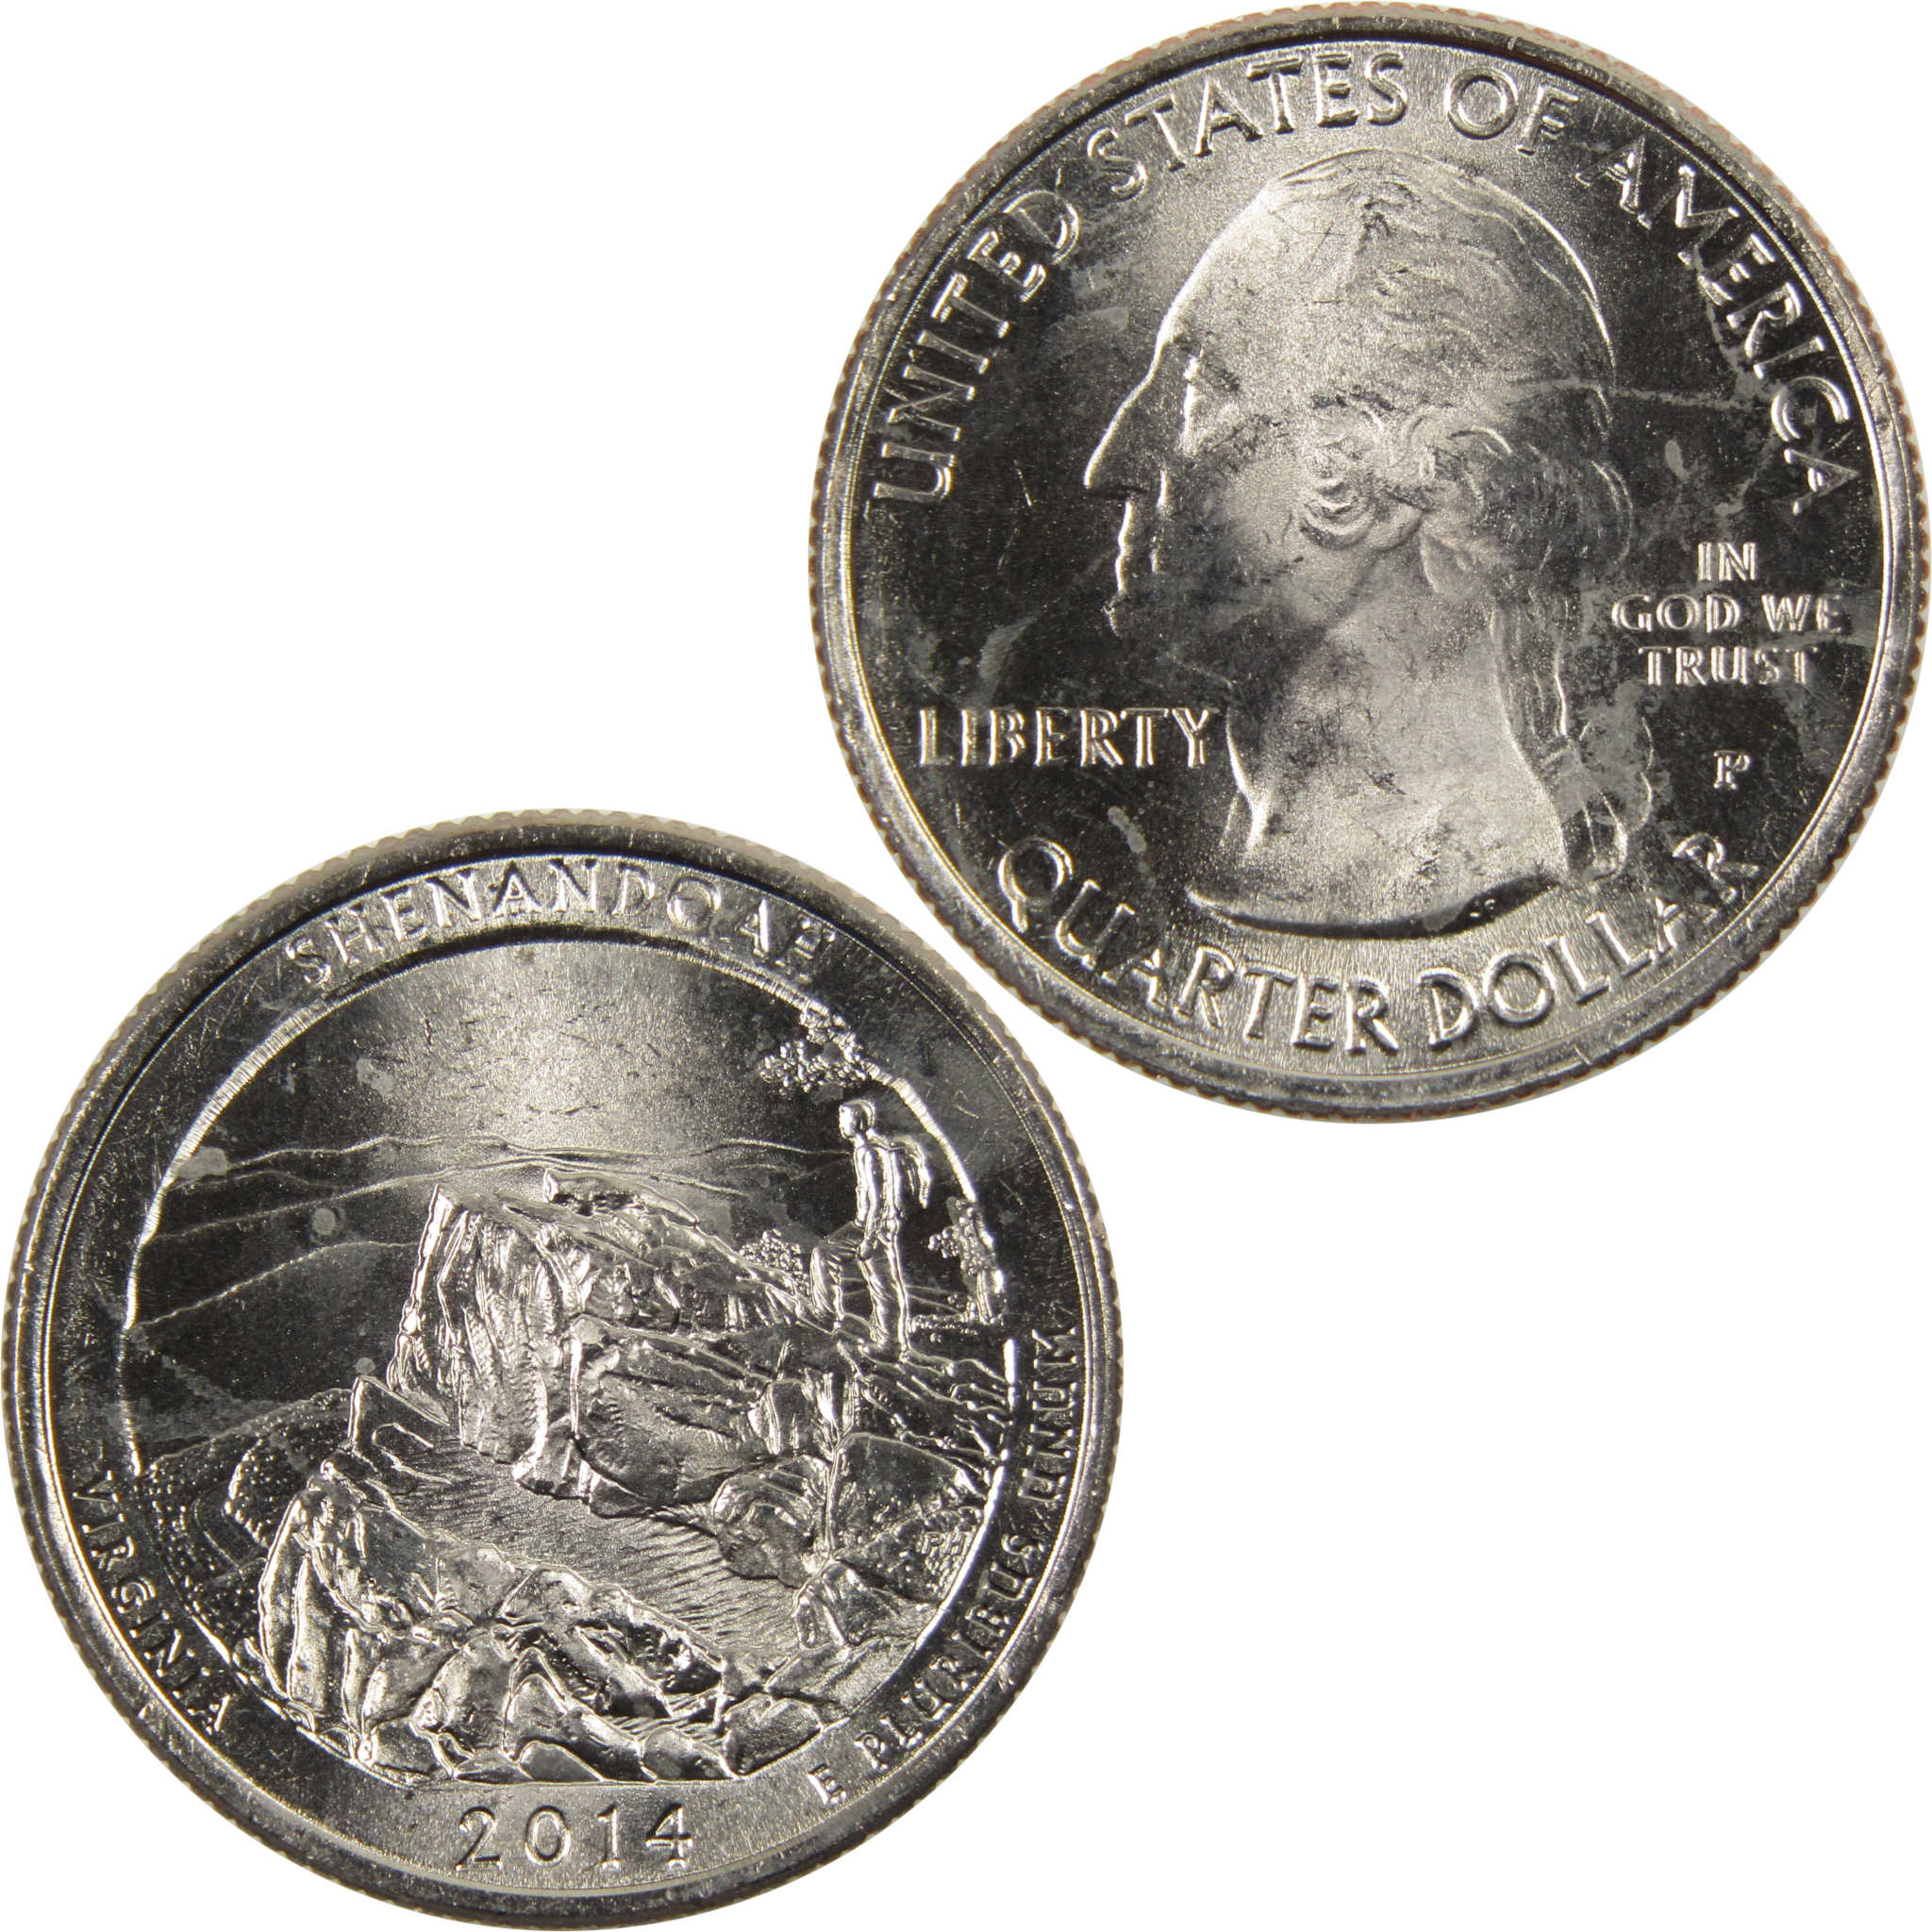 2014 P Shenandoah National Park Quarter BU Uncirculated Clad 25c Coin